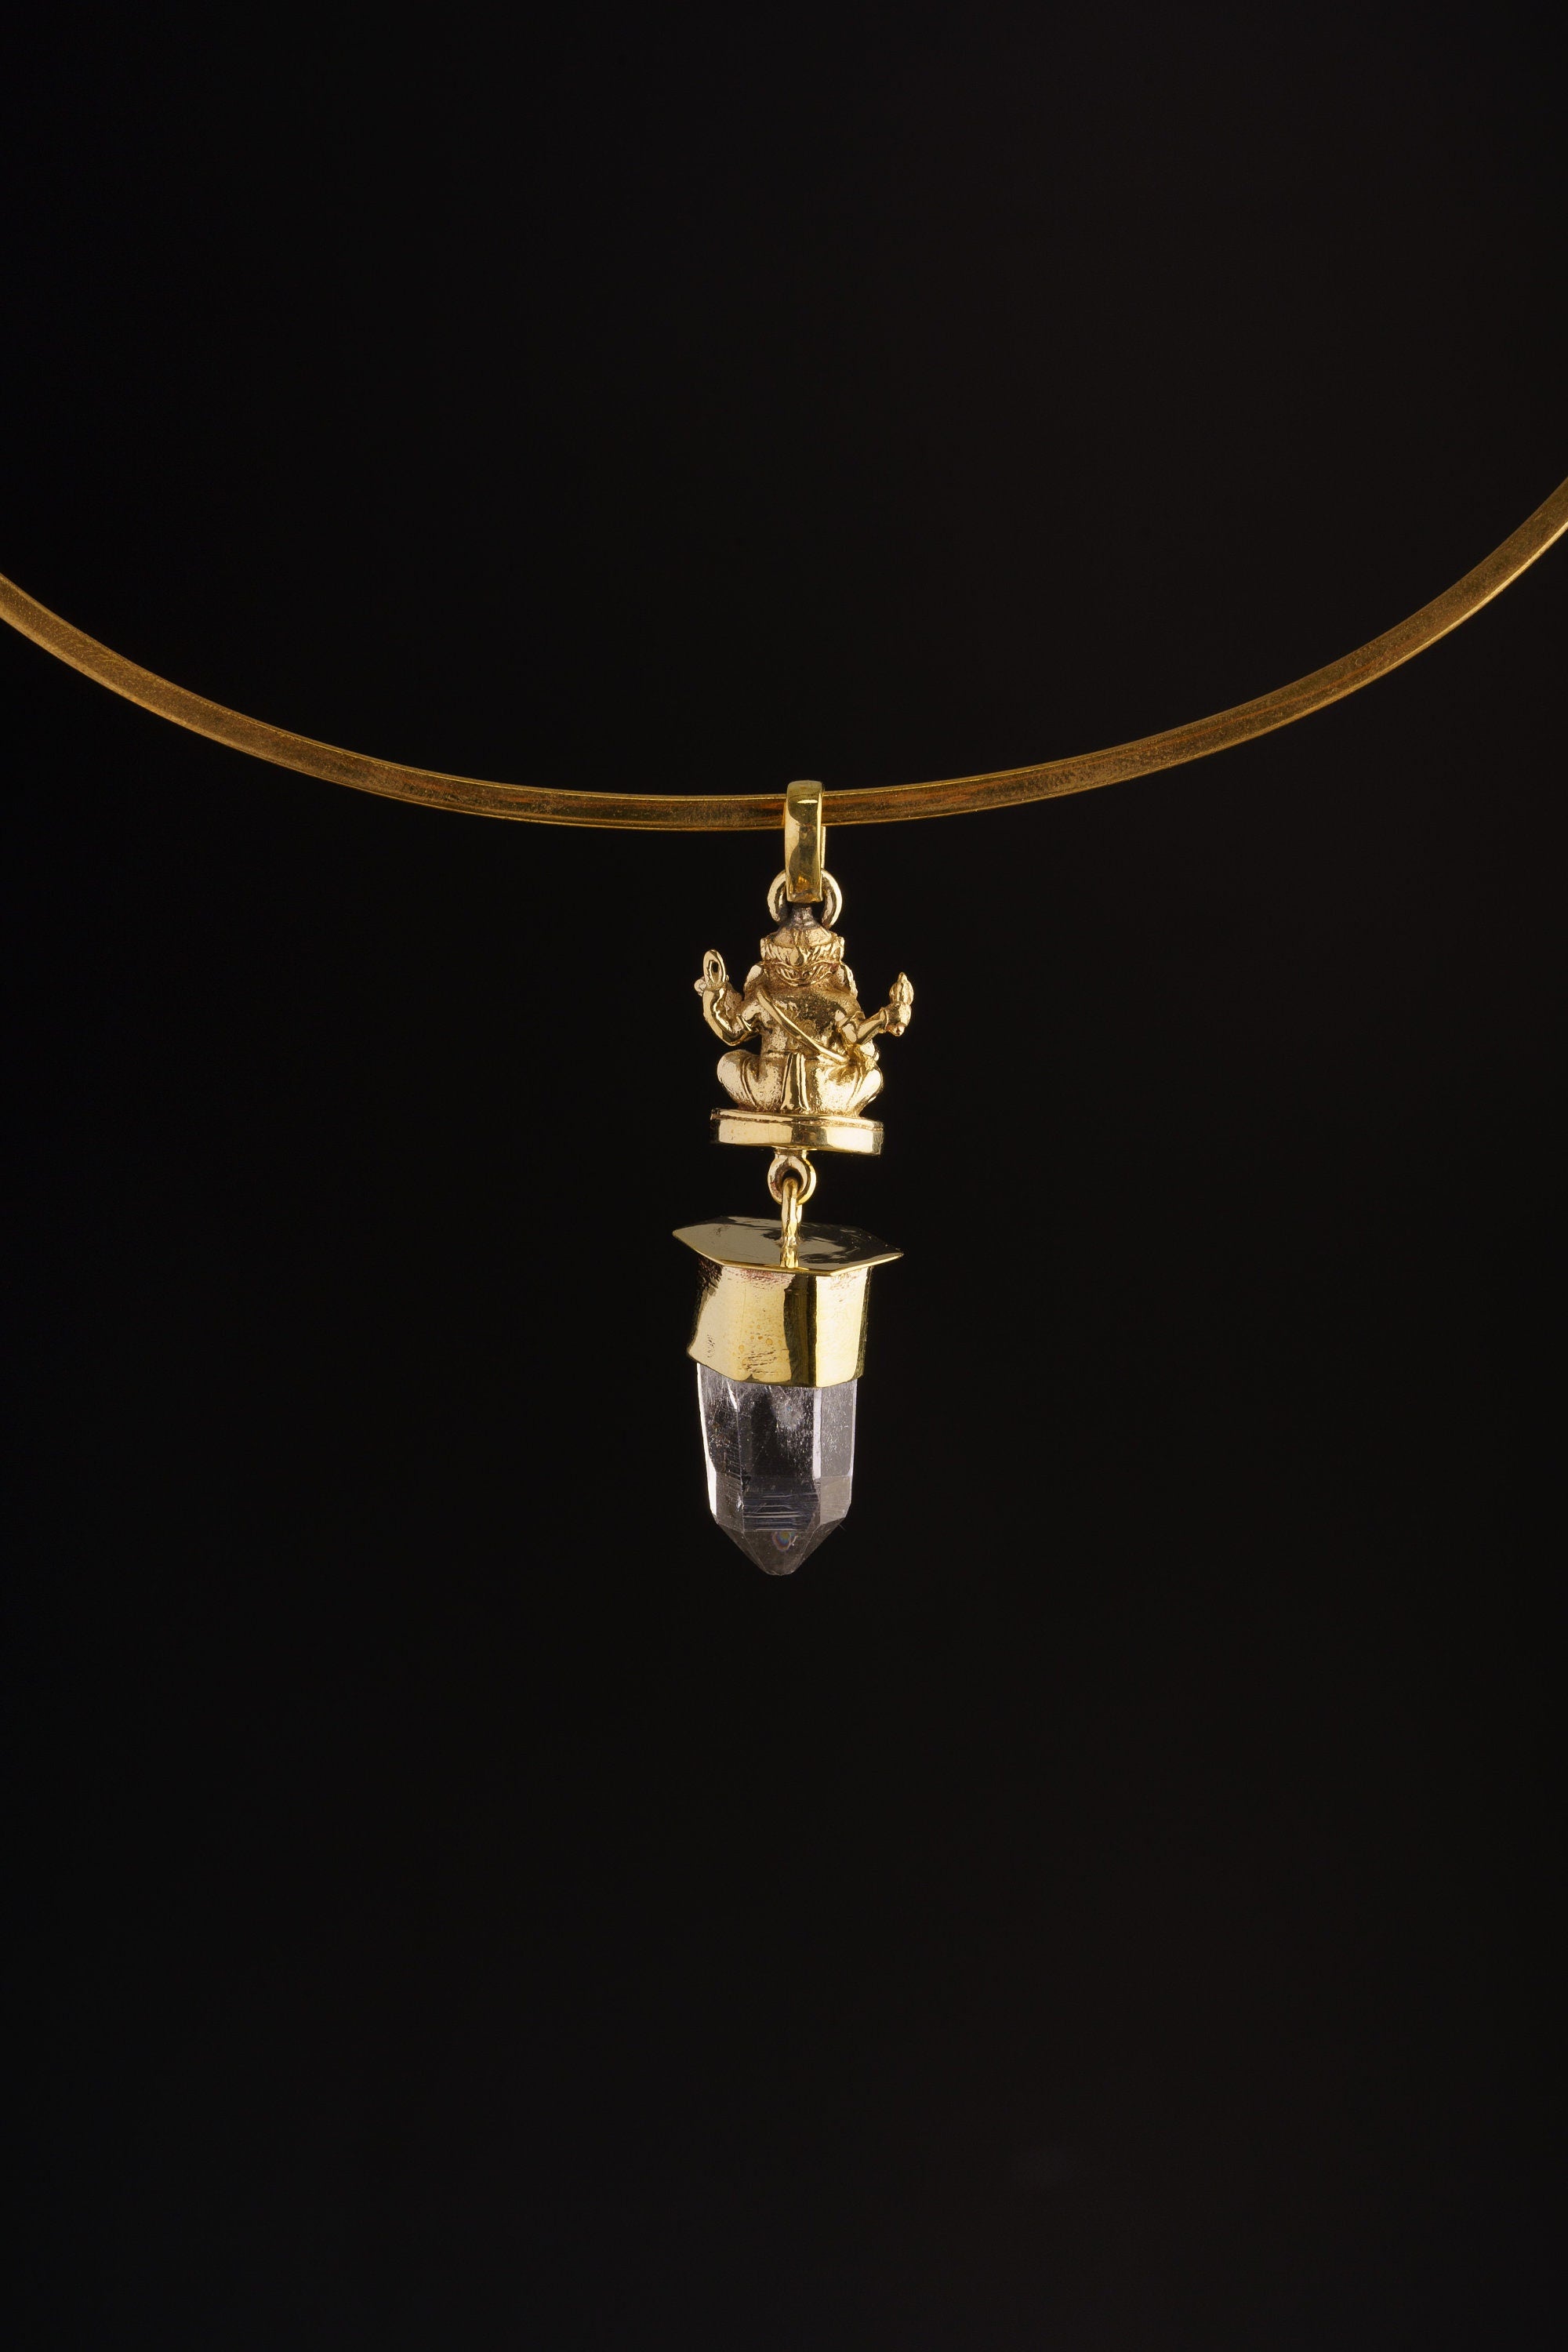 Himalayan Specialty Quartz - Shiny Golden Brass Set - Meditating Lord Shiva Cast - Robust Dangling Talisman Pendant